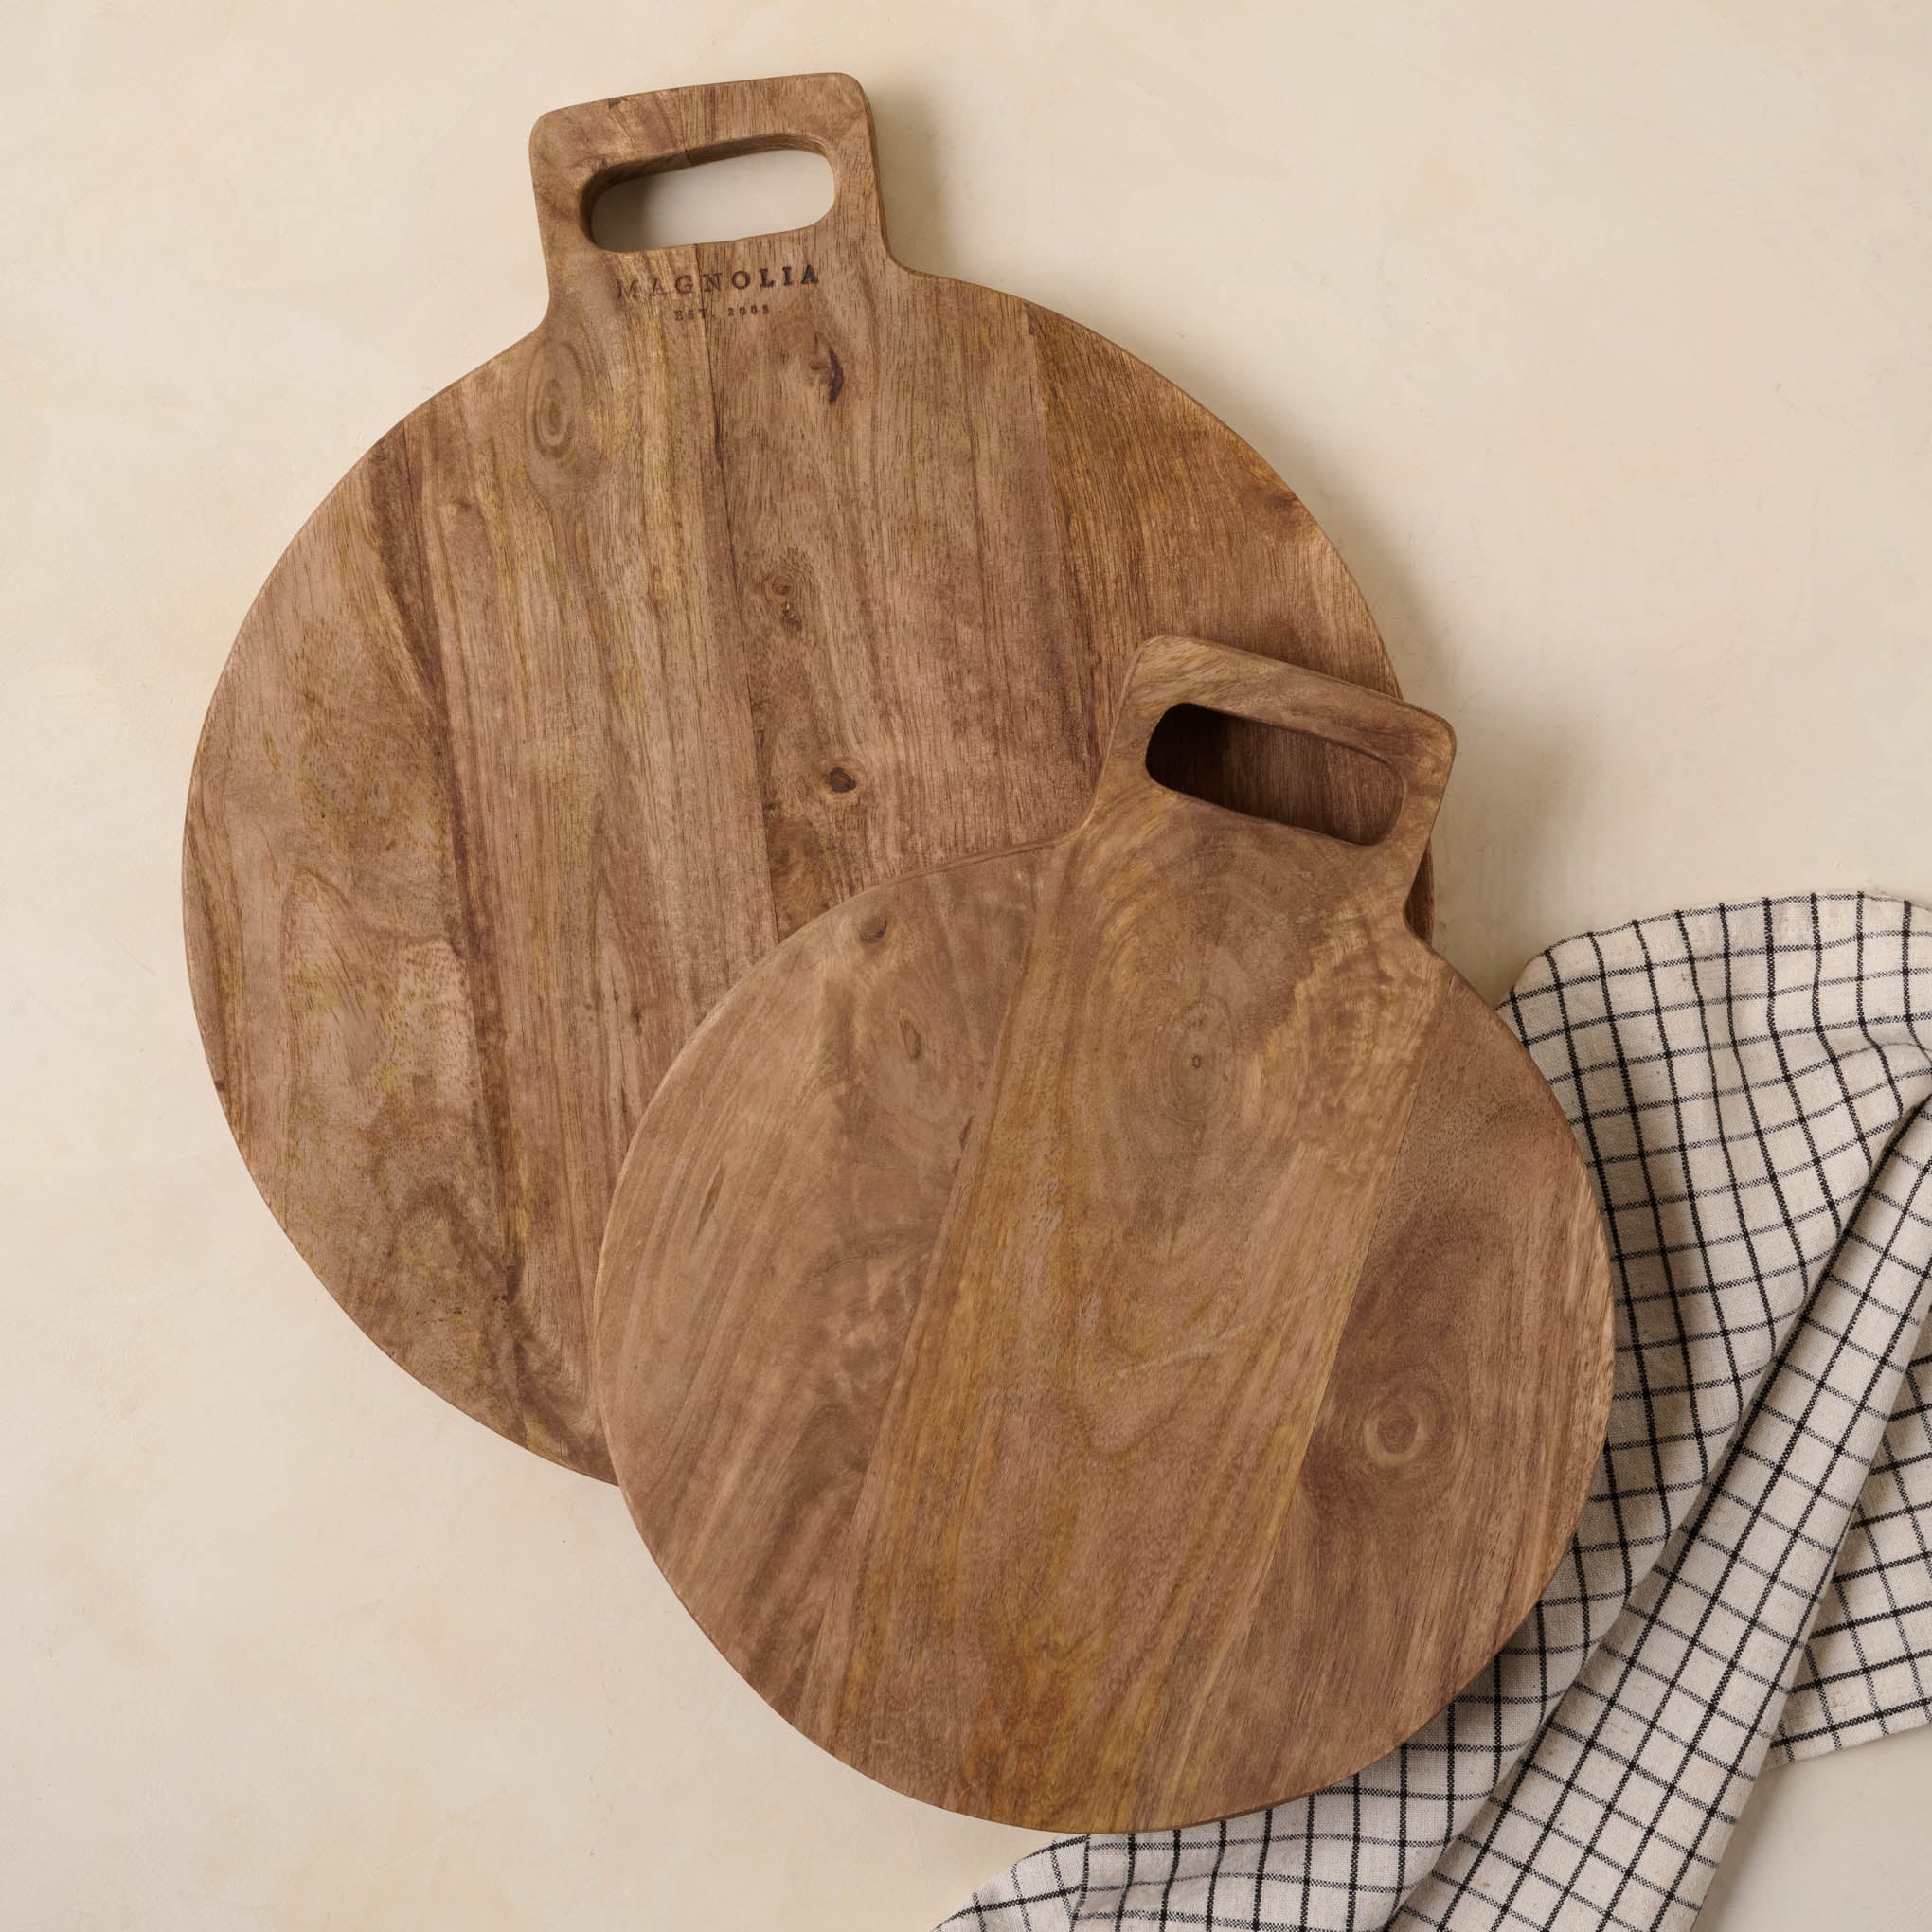 Mango Wood Round Bread Board in two sizes